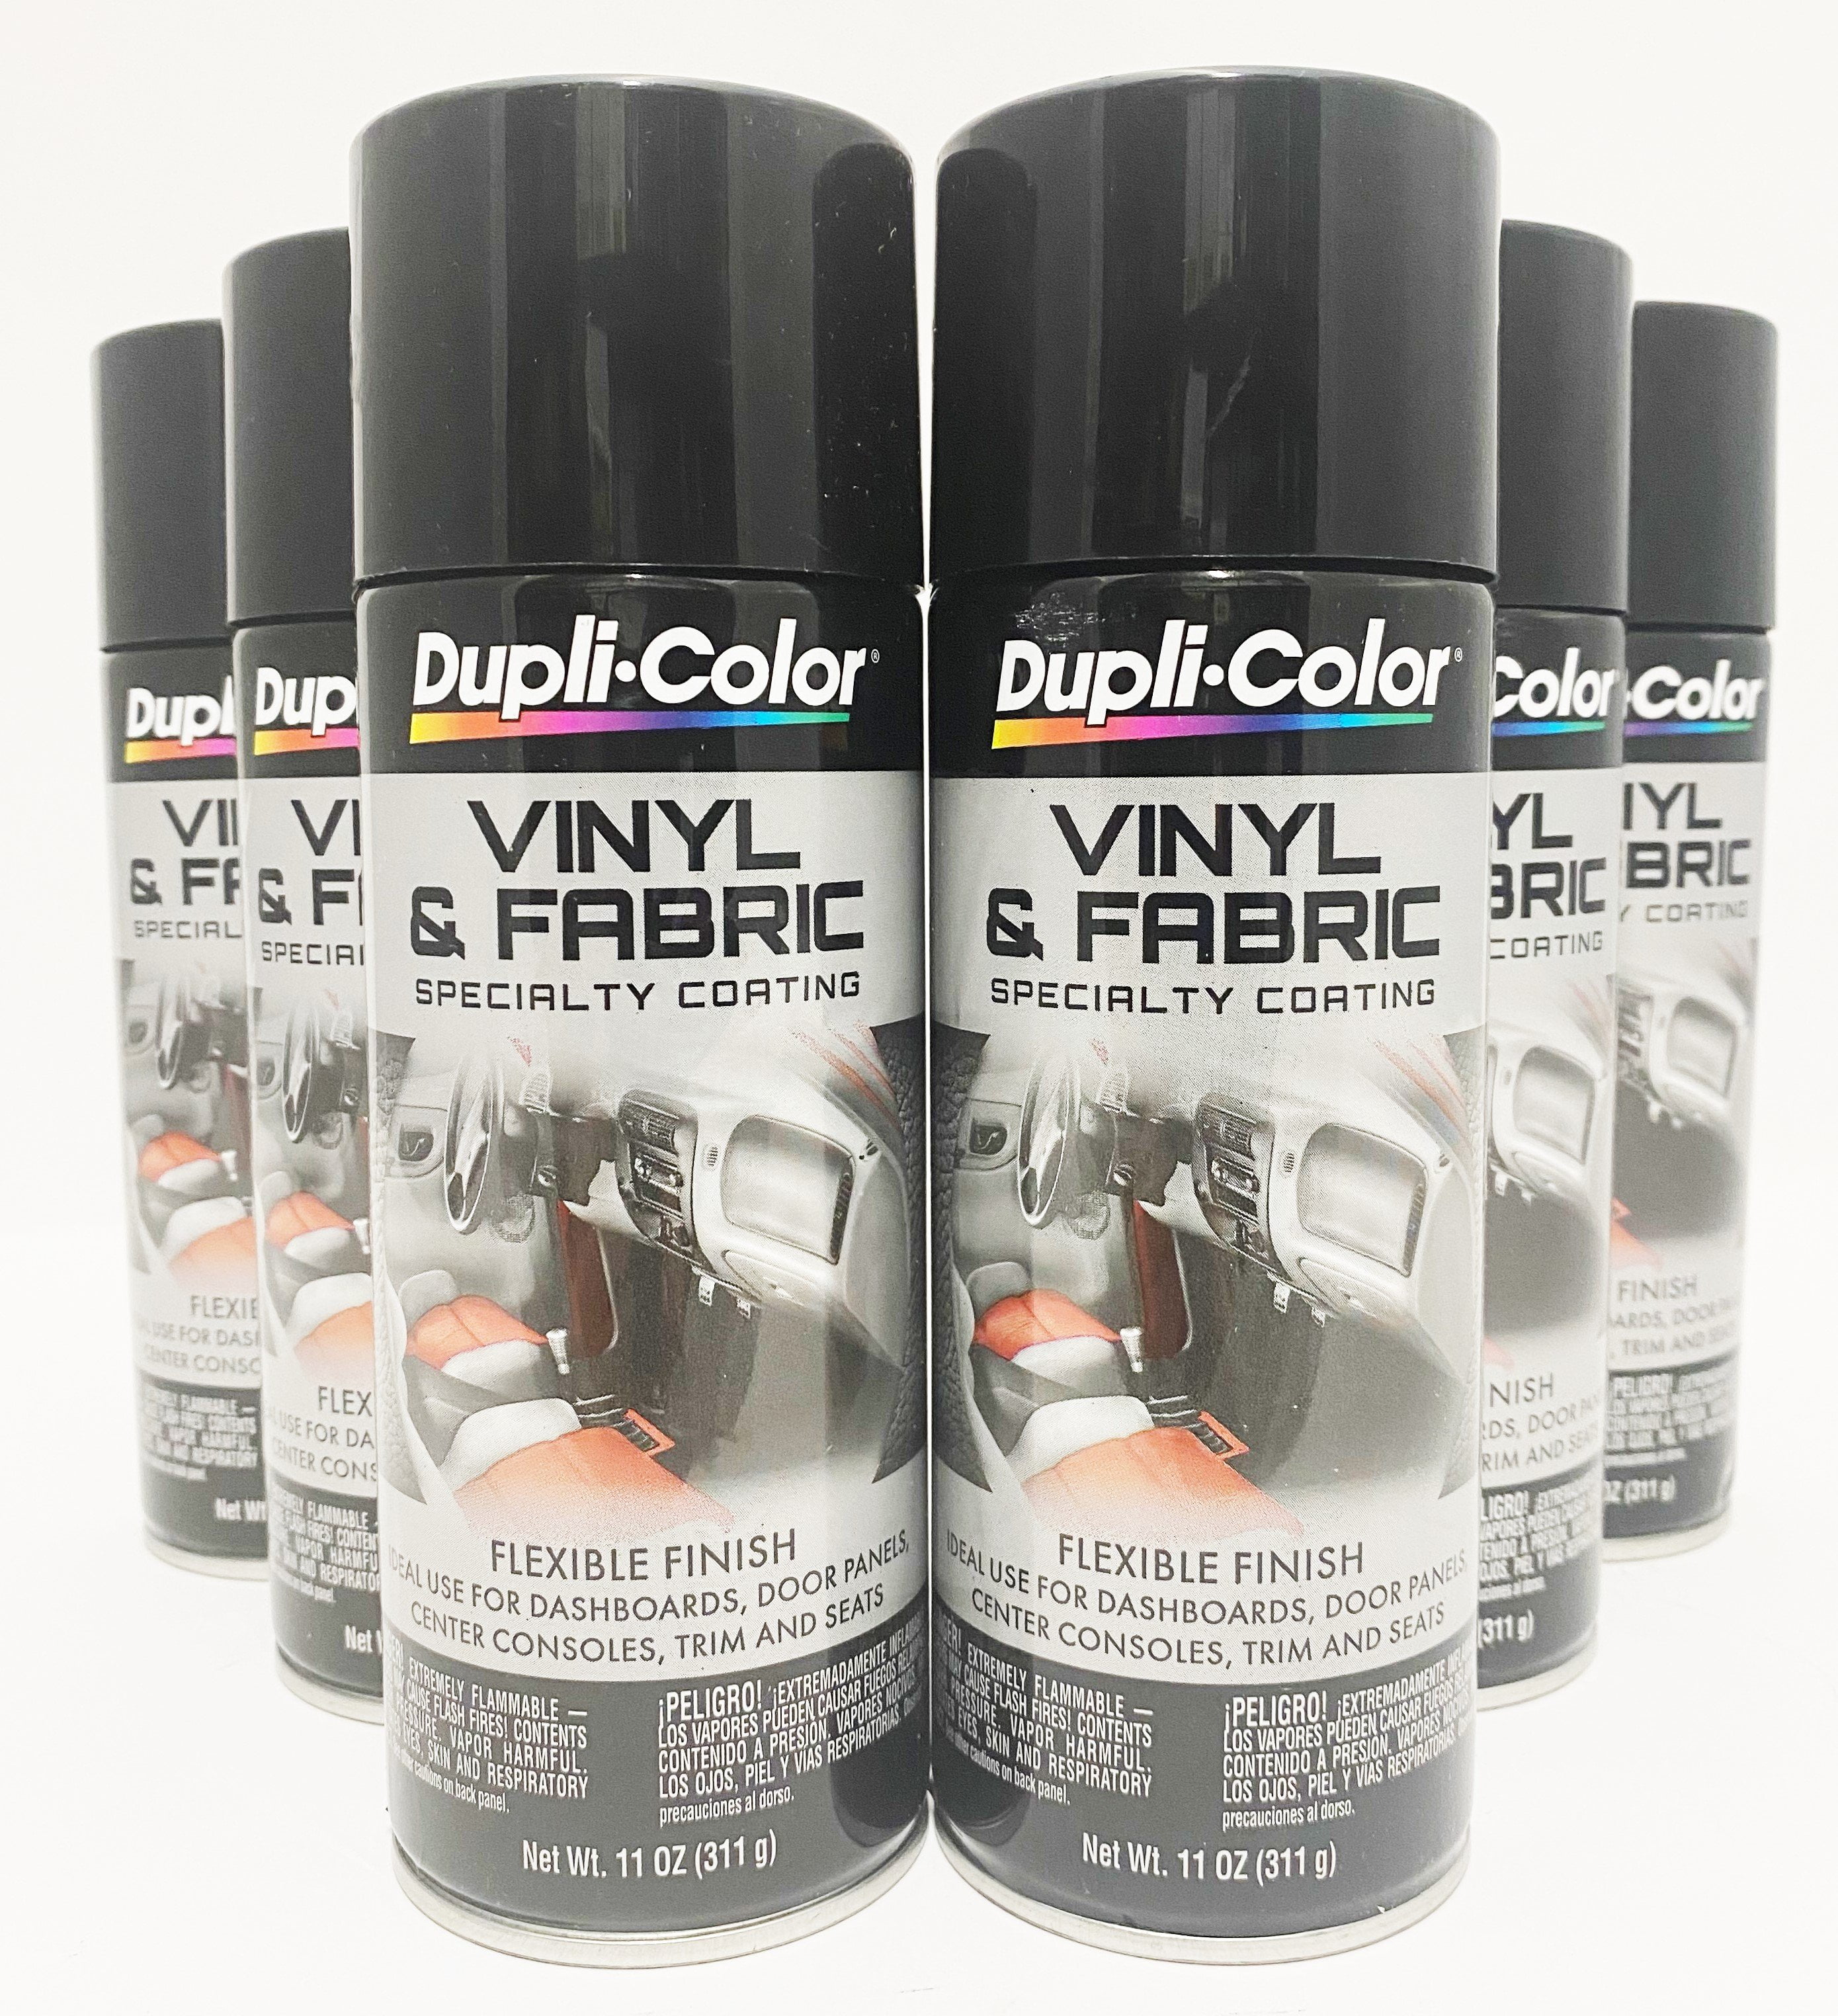 DupliColor Fabric Spray Review 